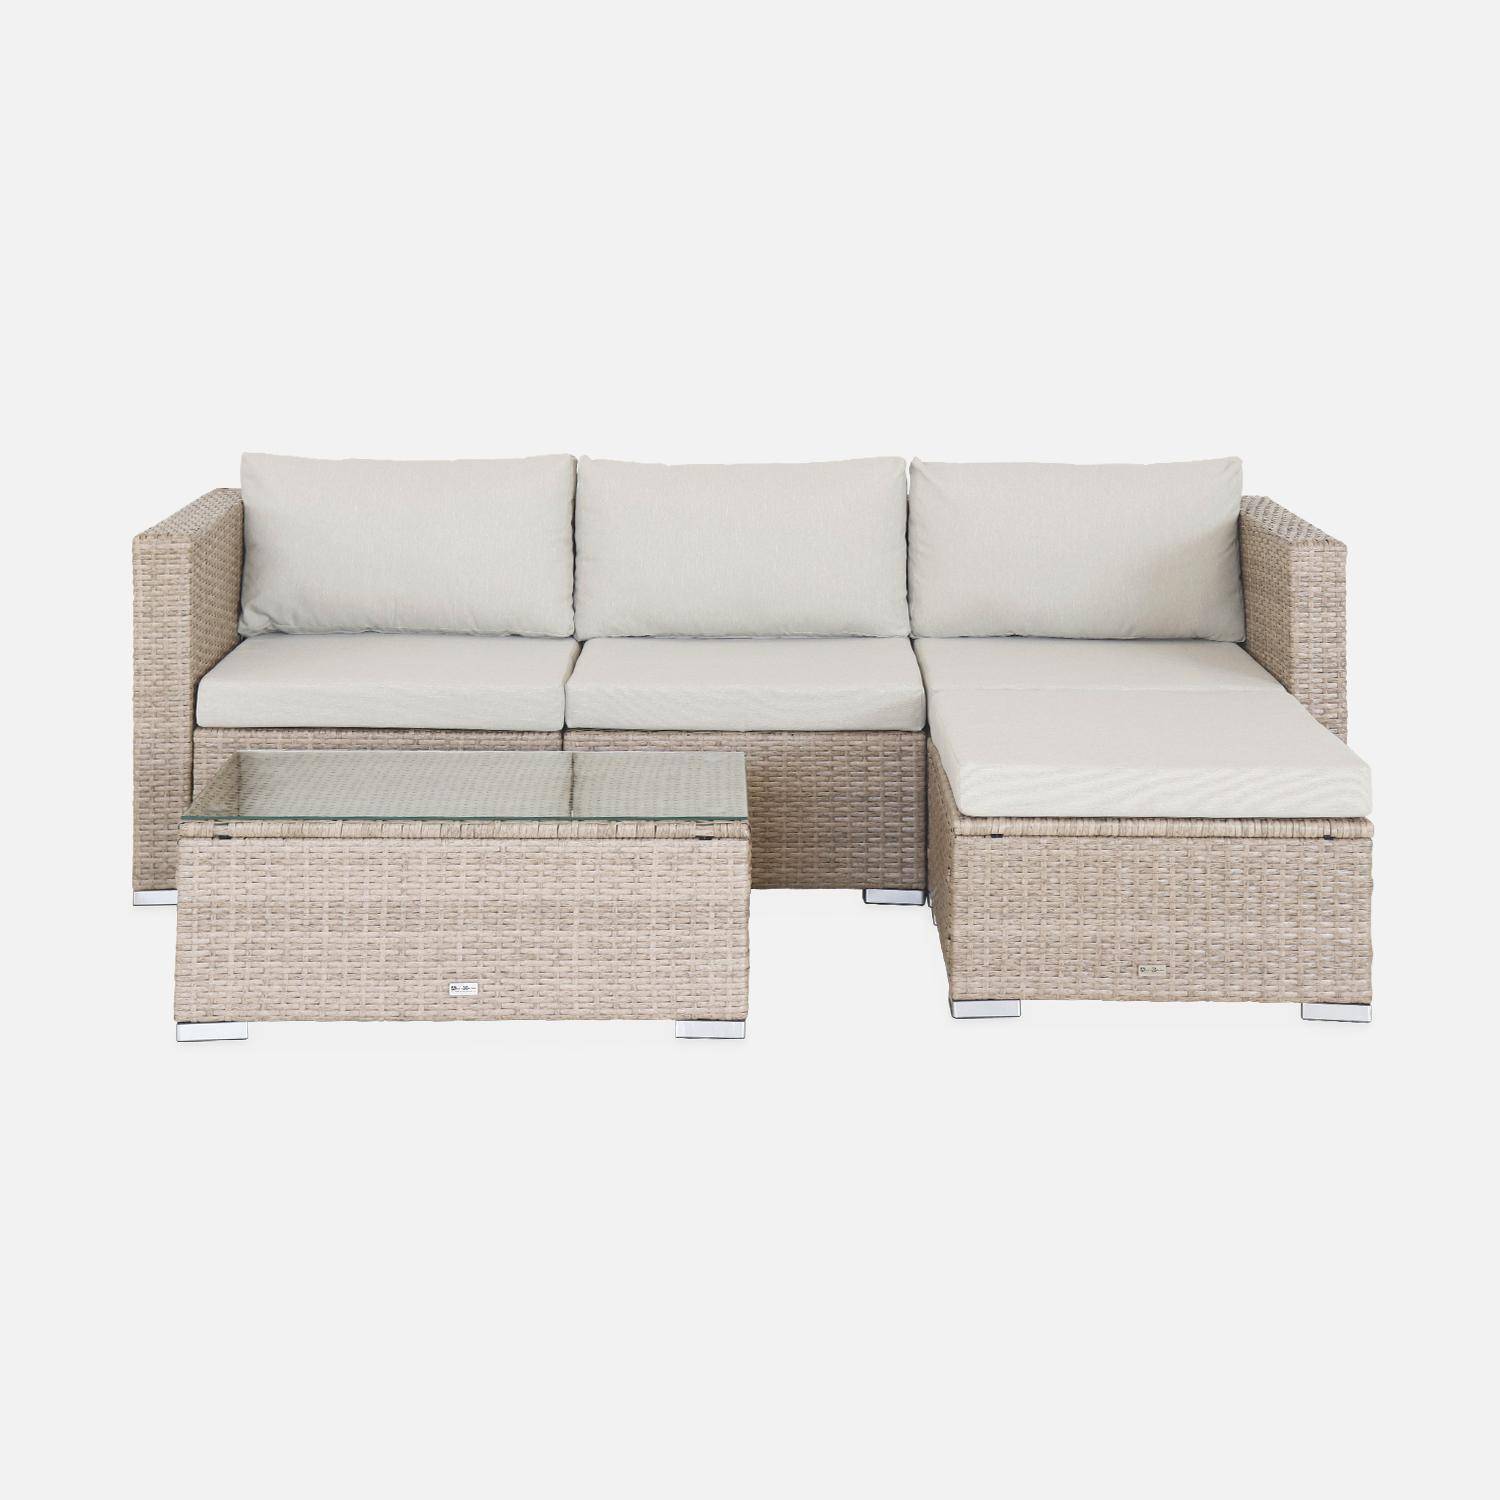 4-seater rattan garden sofa set - sofa, footrest, coffee table - Torino - Beige,sweeek,Photo4